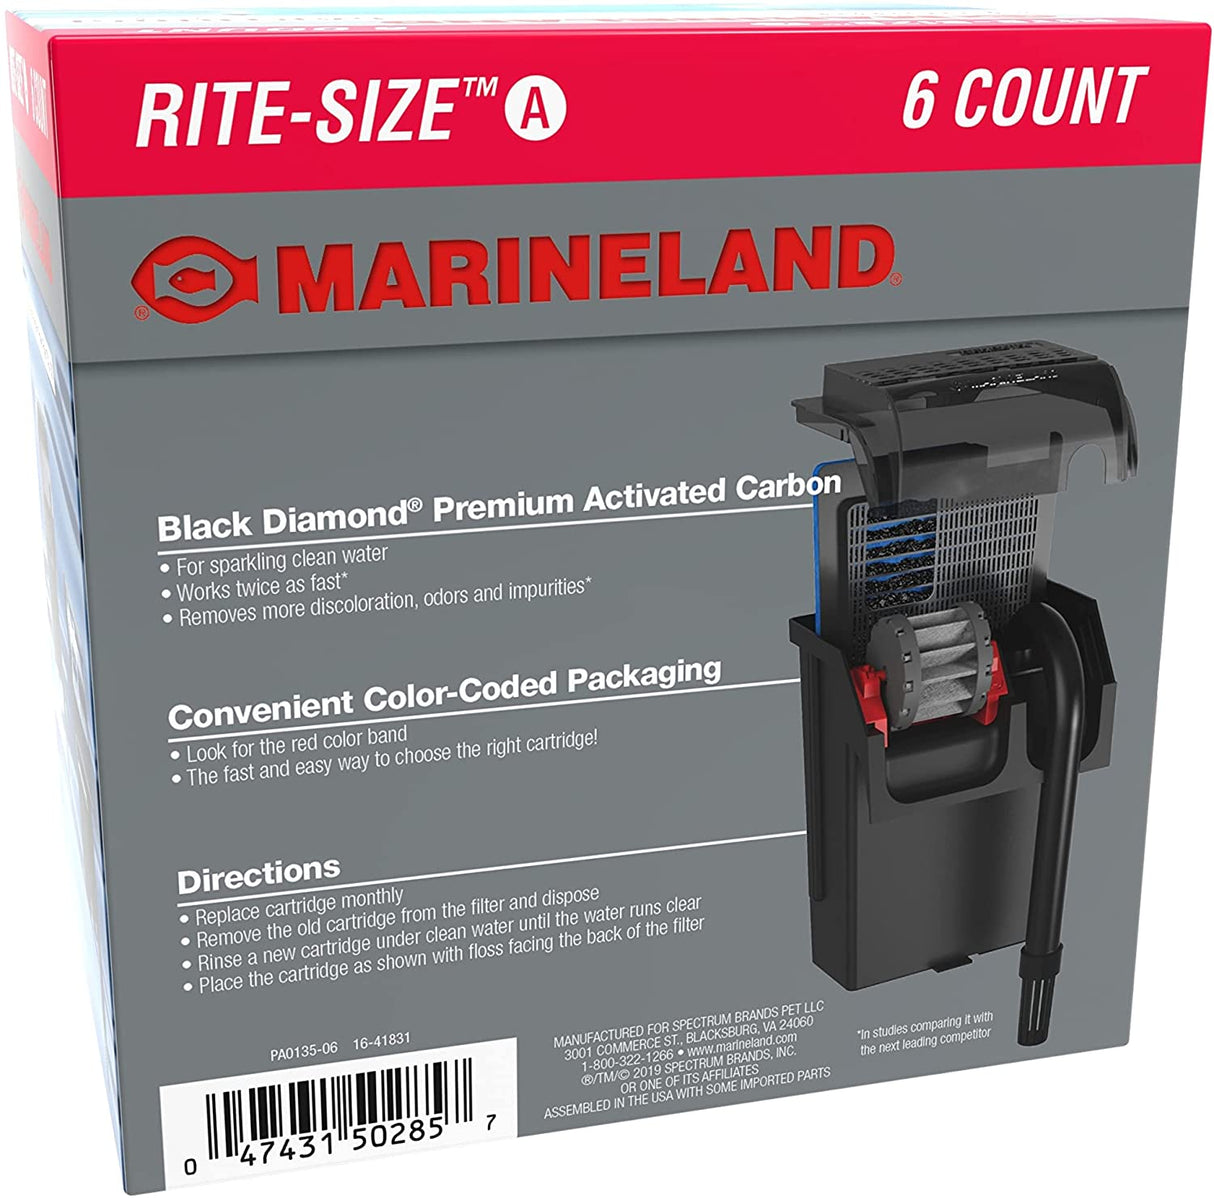 36 count (6 x 6 ct) Marineland Rite-Size A Cartridge (Penguin 99B, 100B and Mini)